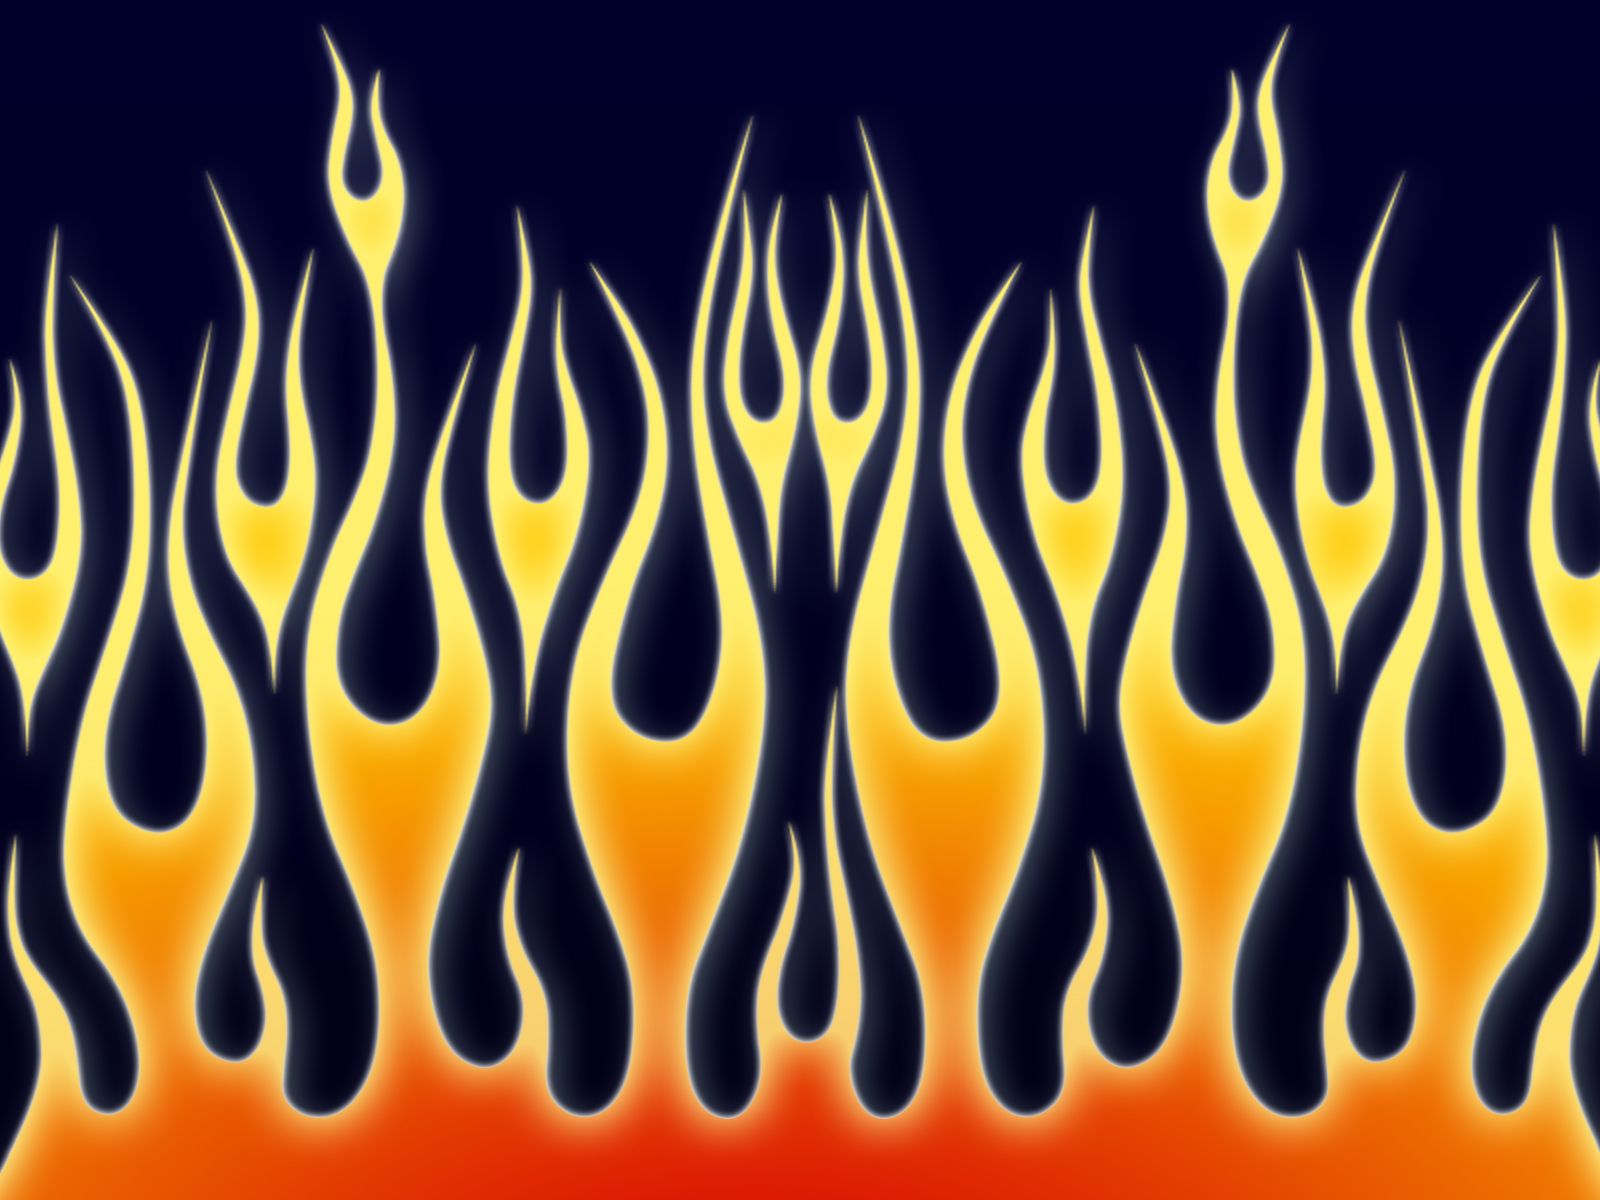 Hot Rod Flames Clip Art N8 free image.